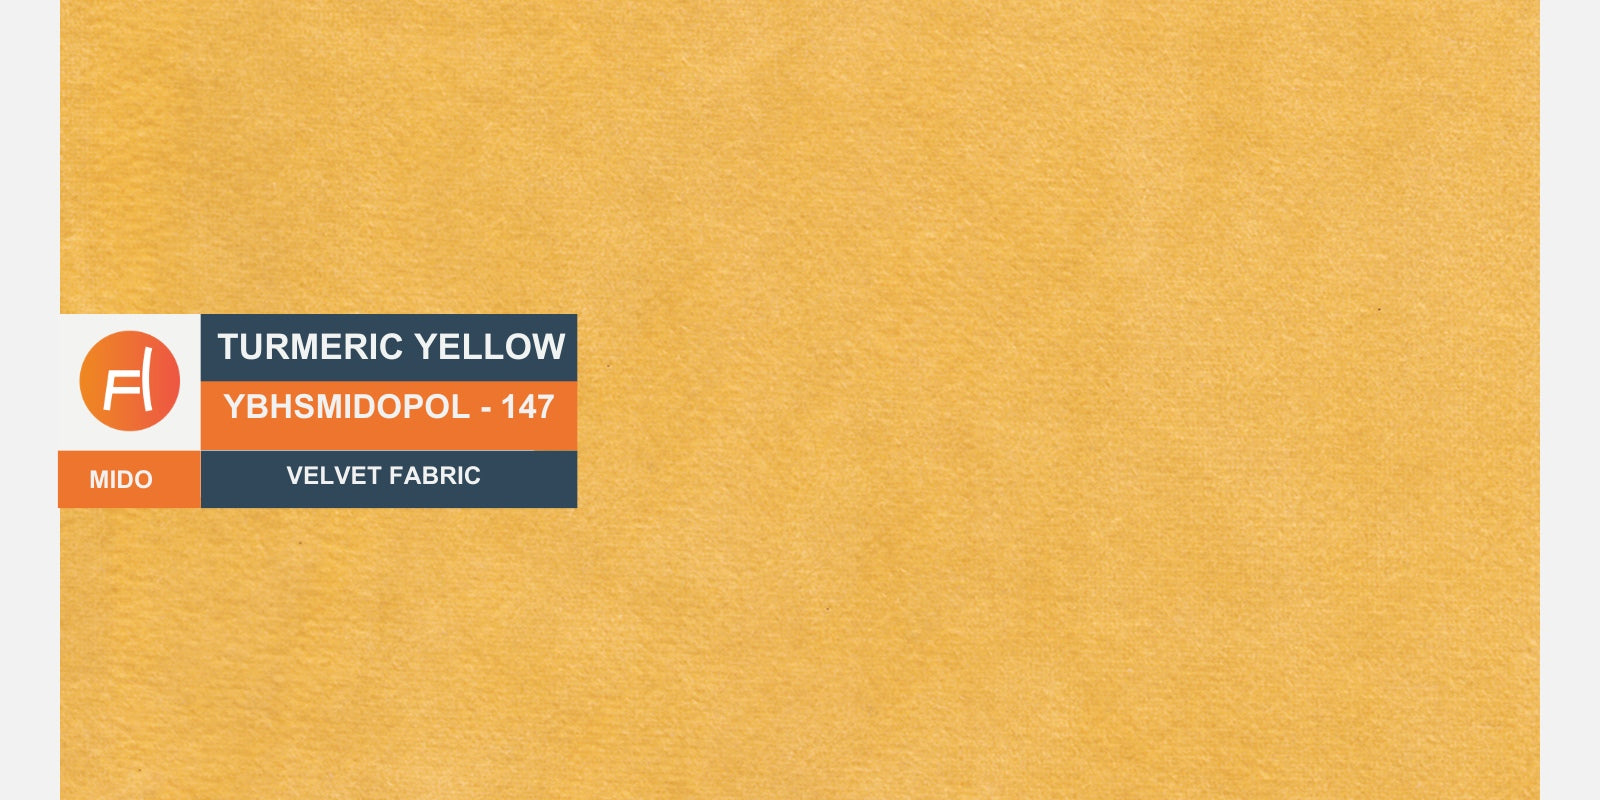 Daroo Velvet 3 Seater Sofa in Turmeric yellow Colour